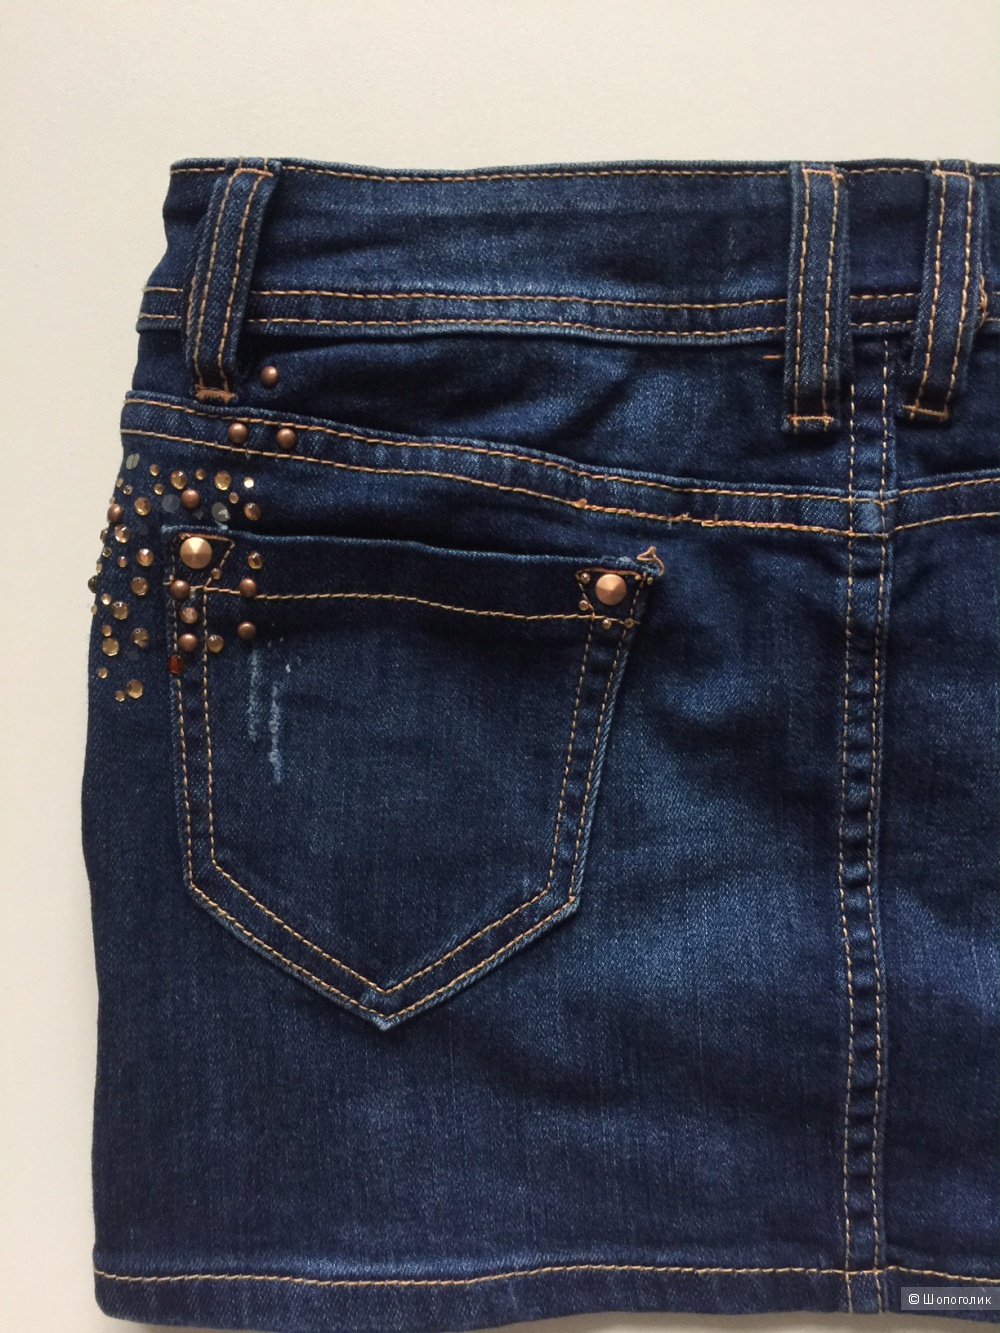 Юбка короткая джинсовая  марка TOXIK3&Jeans  размер M